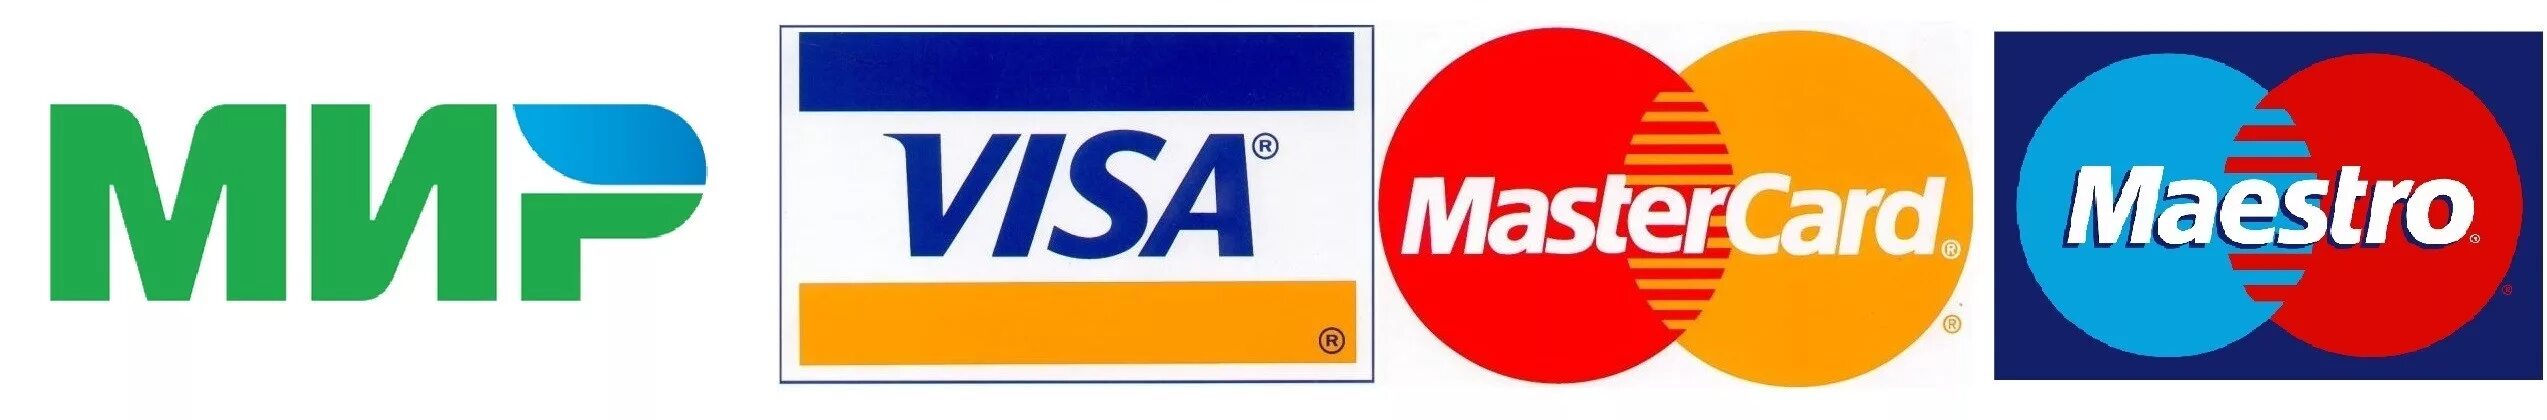 Visa master. Значок оплаты банковскими картами. Логотипы кредитных карт. Логотипы платежных систем. Карты виза и Мастеркард.